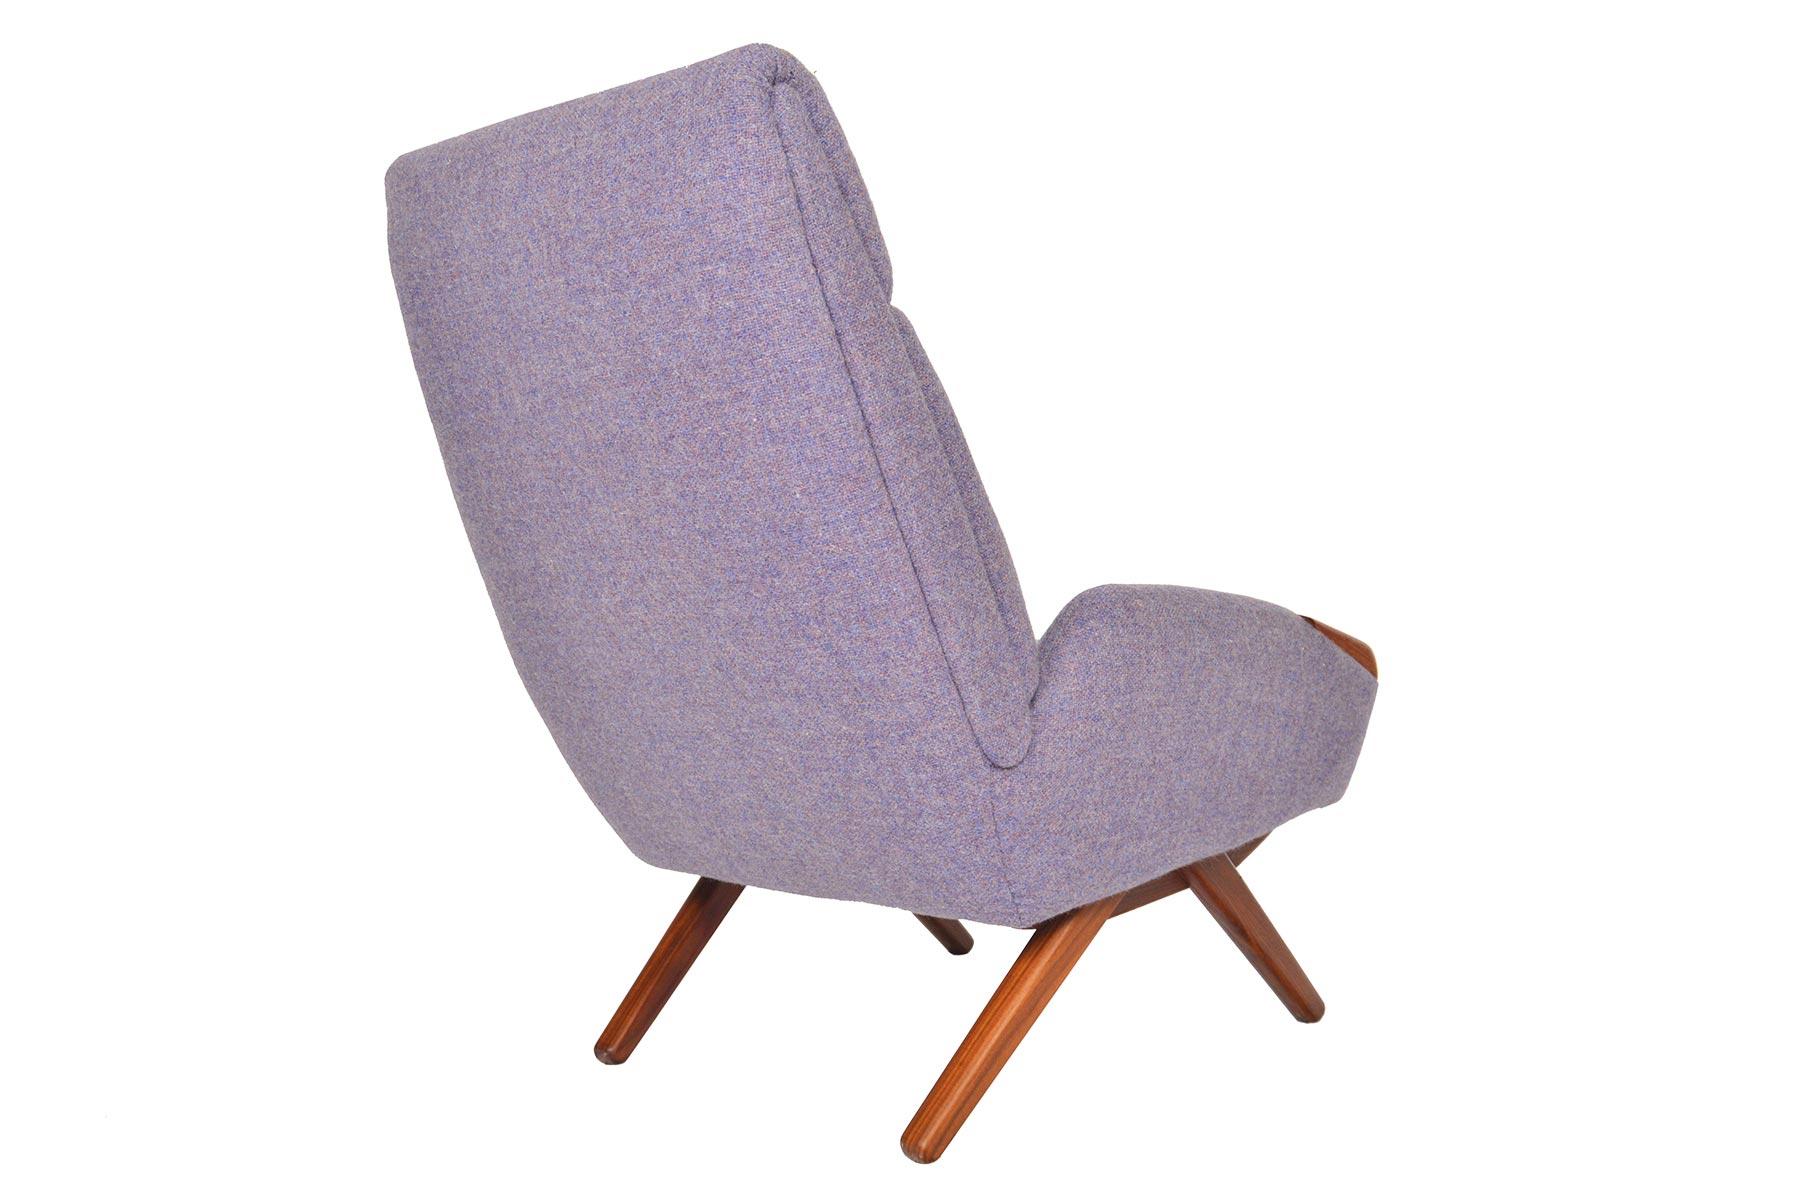 Mid-20th Century Danish Modern Teak Pawed High Back Lounge Chair